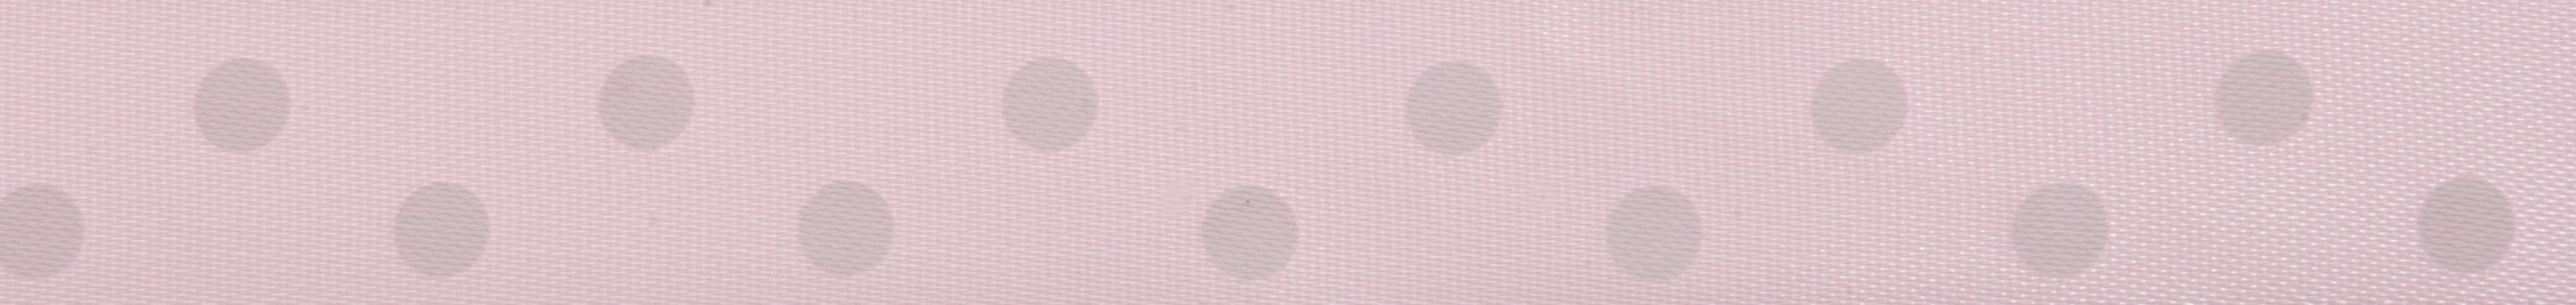 Satin - 5m x 15mm - Polka Dot - Pink